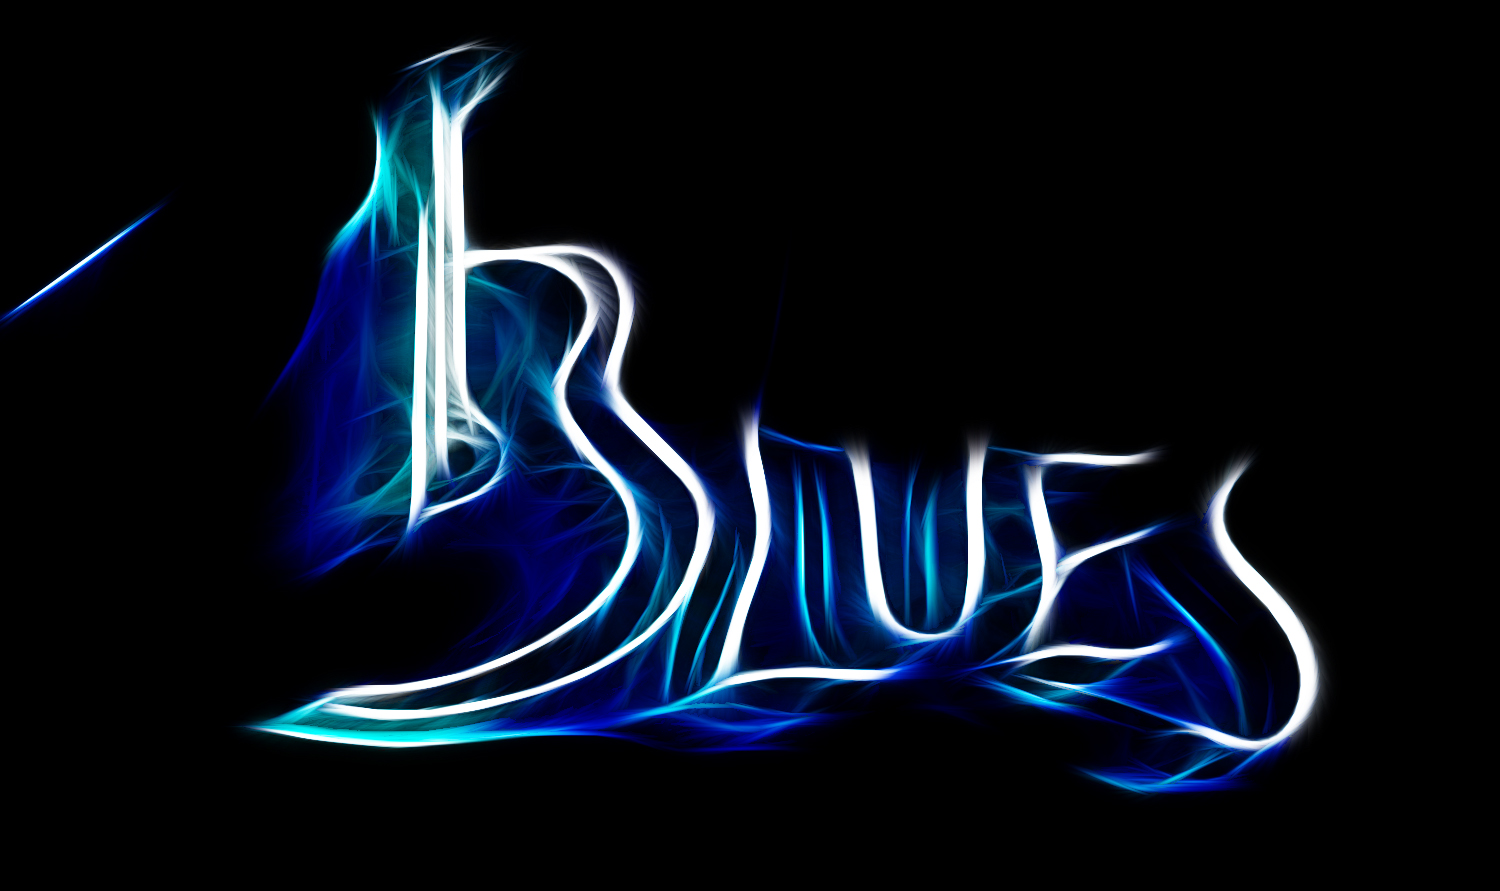 Blues - a popular genre of music